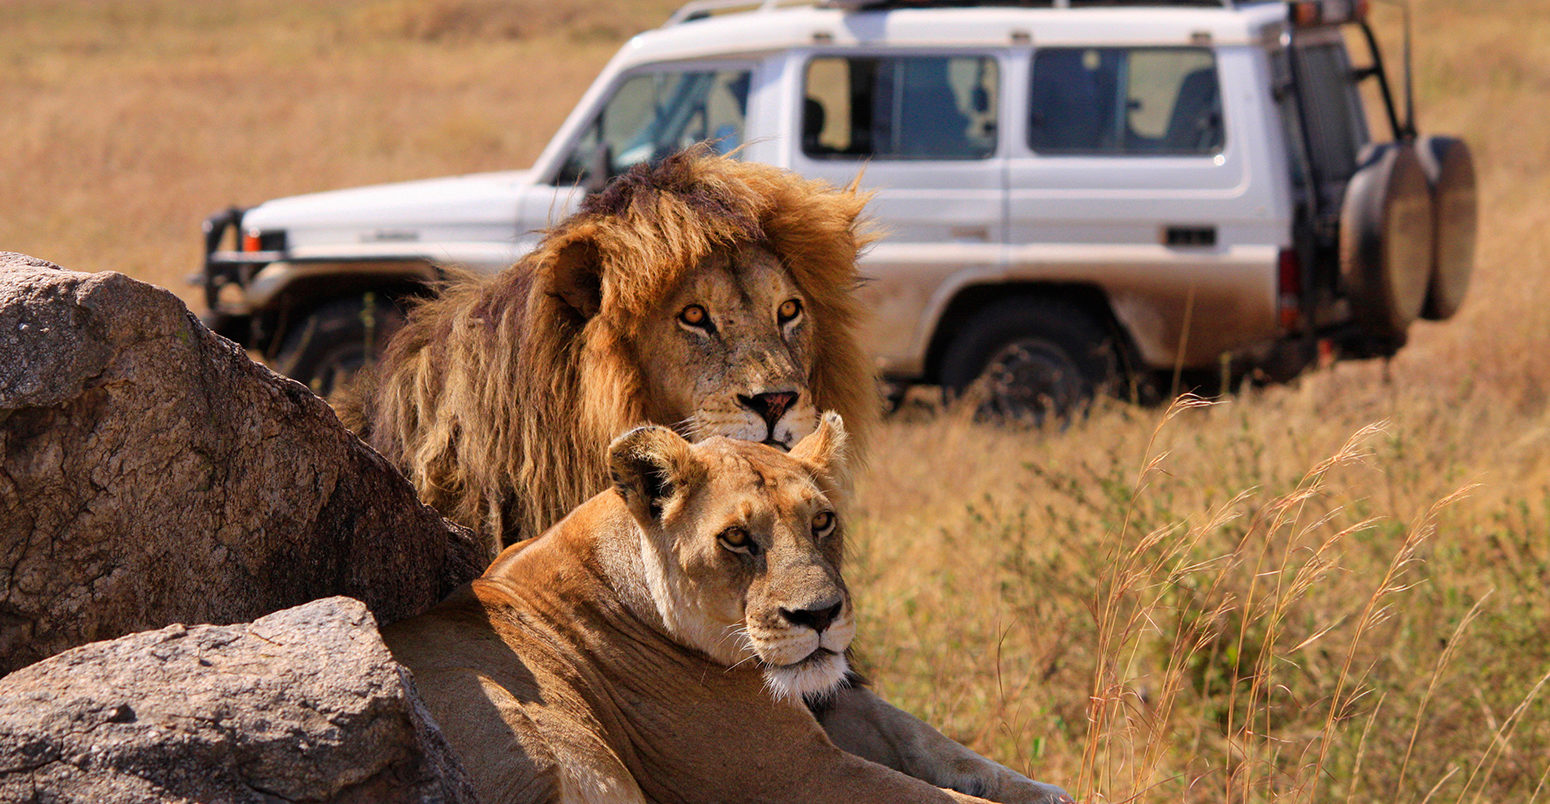 EBRGGN lion (Panthera leo), lion couple on rocks in the savannah, watching by a safari group, Tanzania, Serengeti National Park. Credit: blickwinkel / Alam